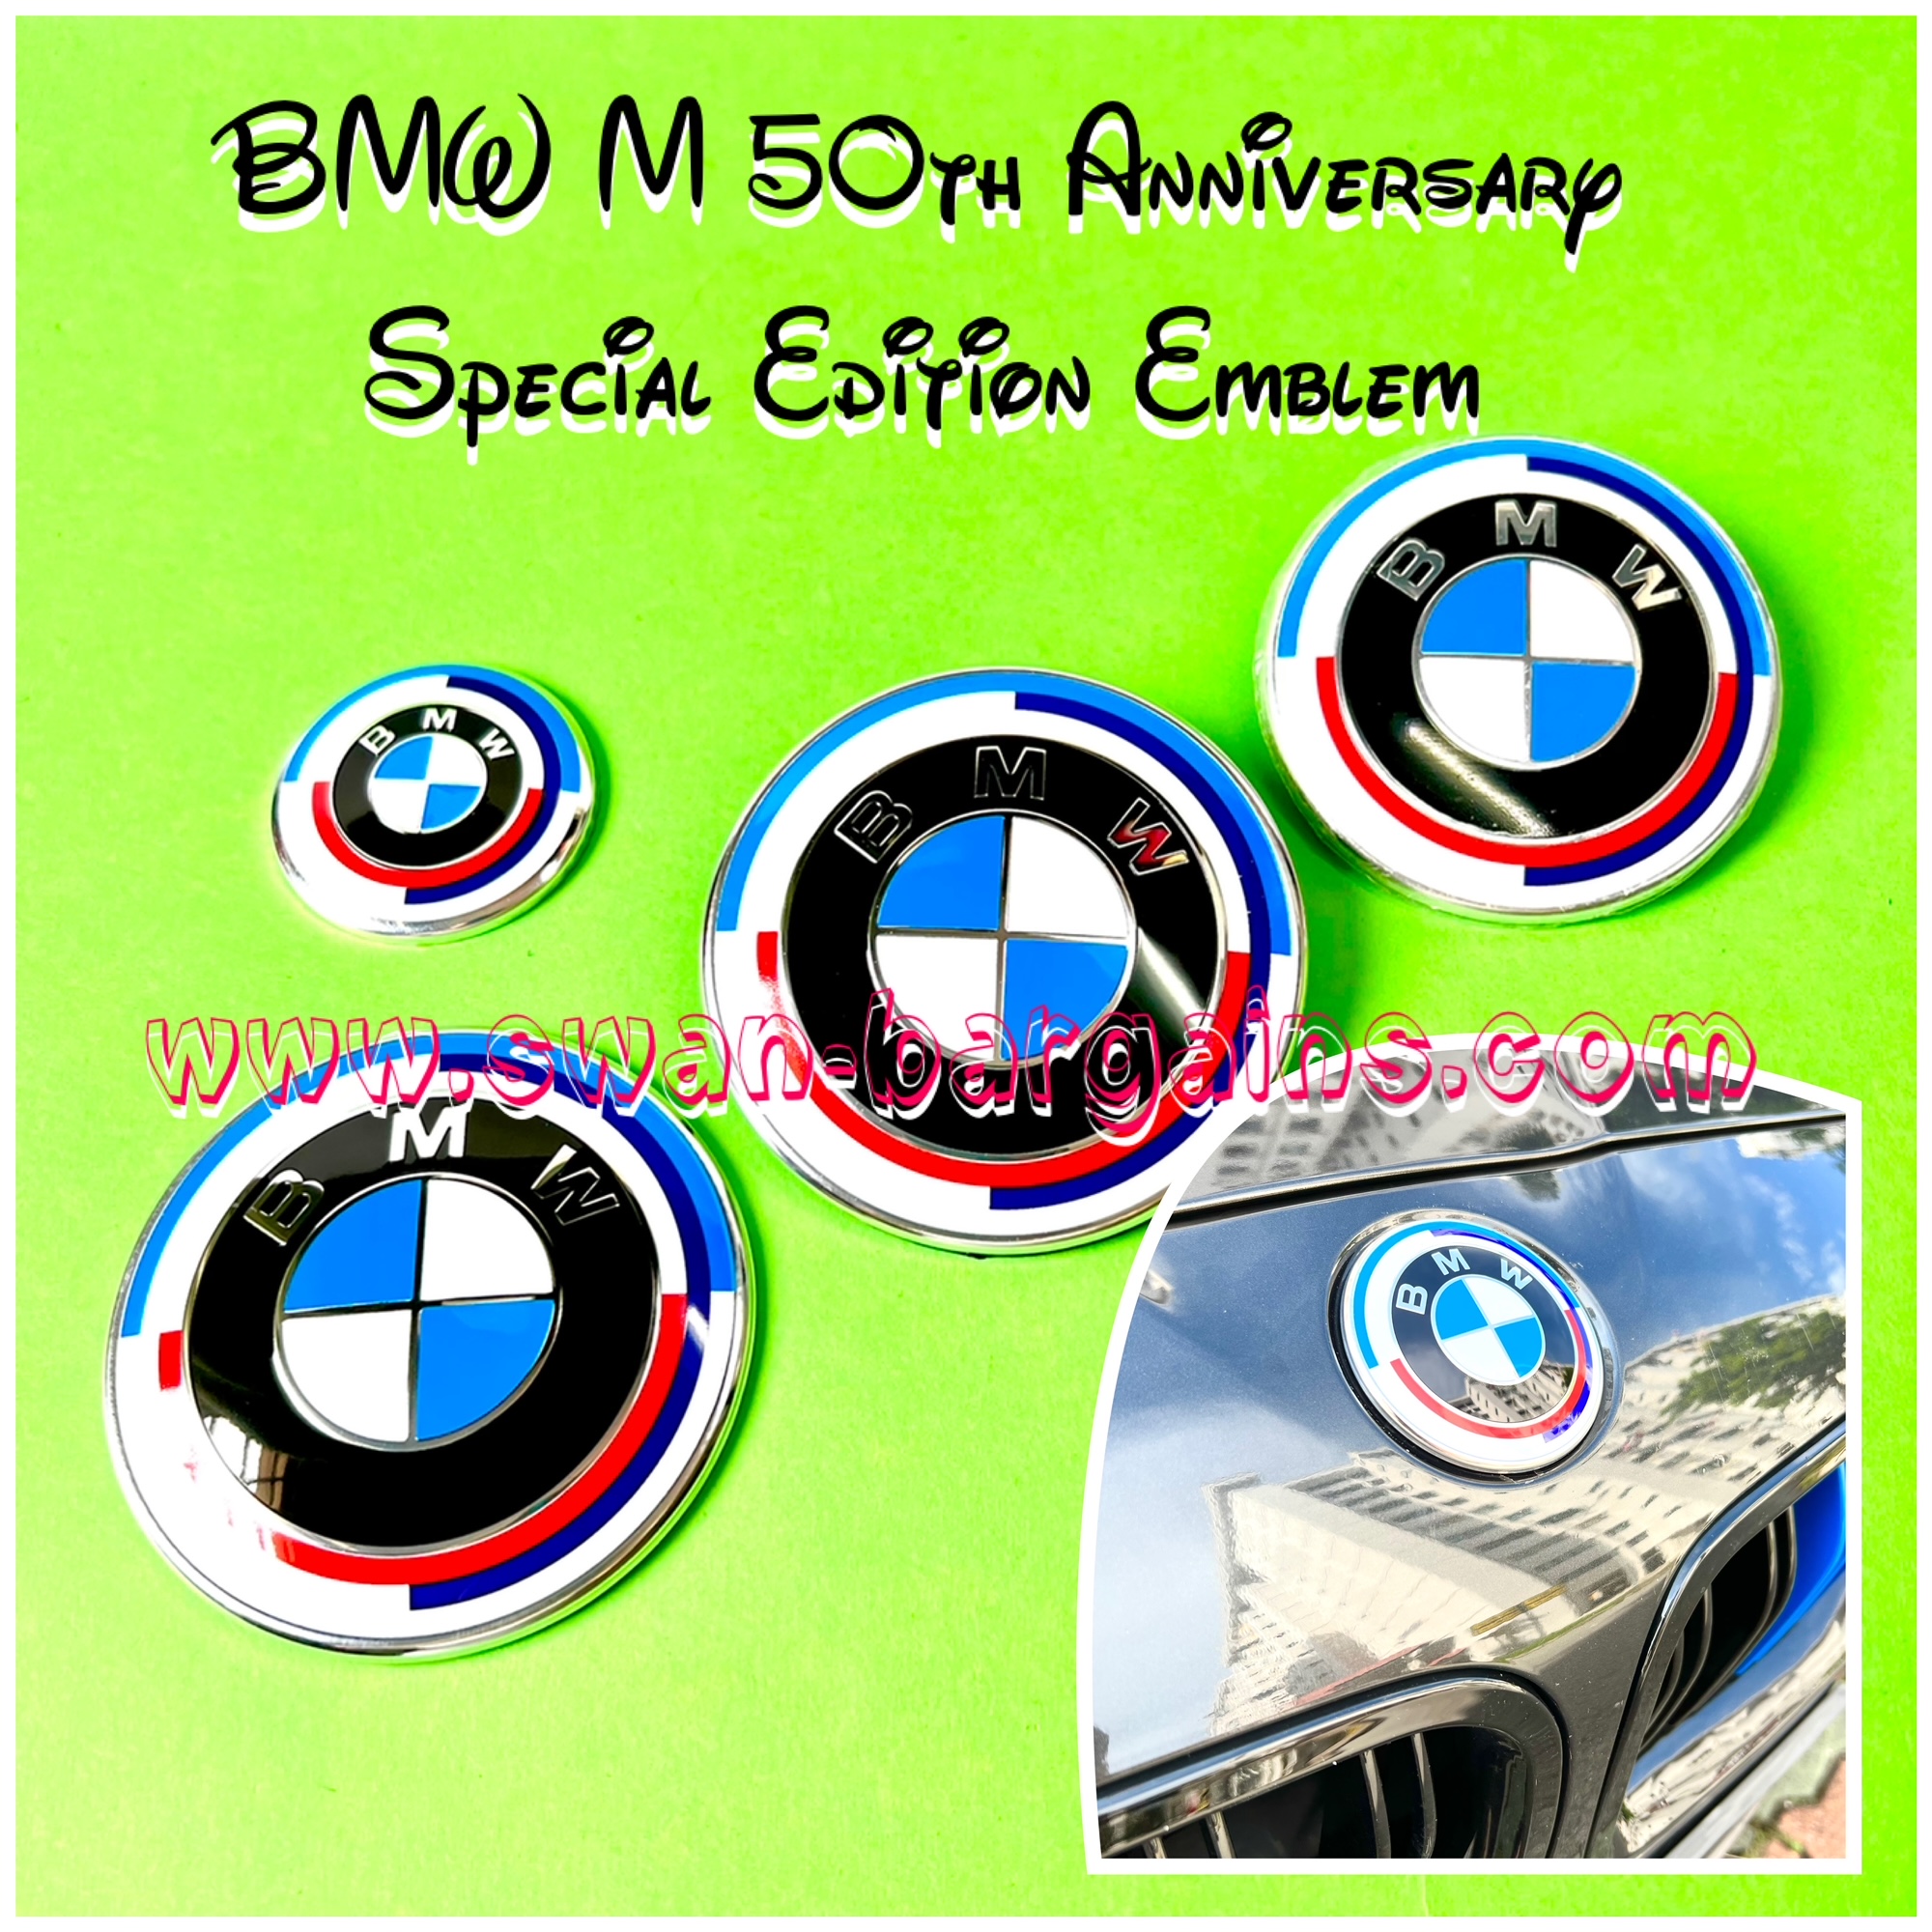 BMW M 50th Anniversary Special Edition Emblem Singapore